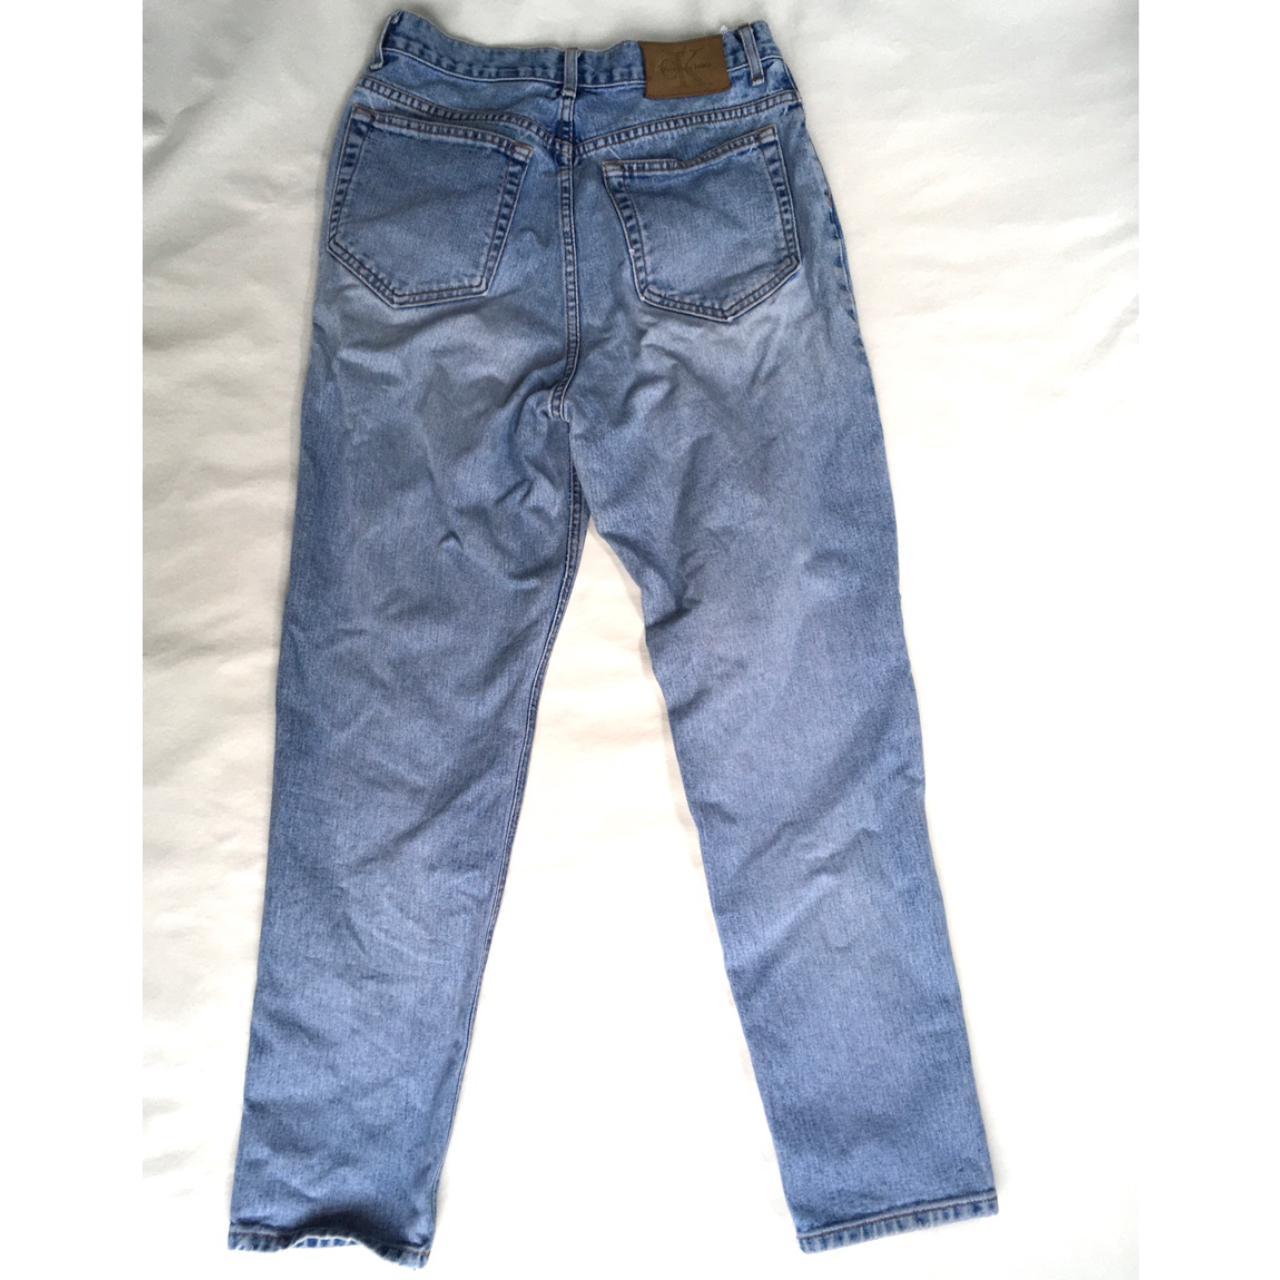 Product Image 2 - Vintage Calvin Klein jeans, light